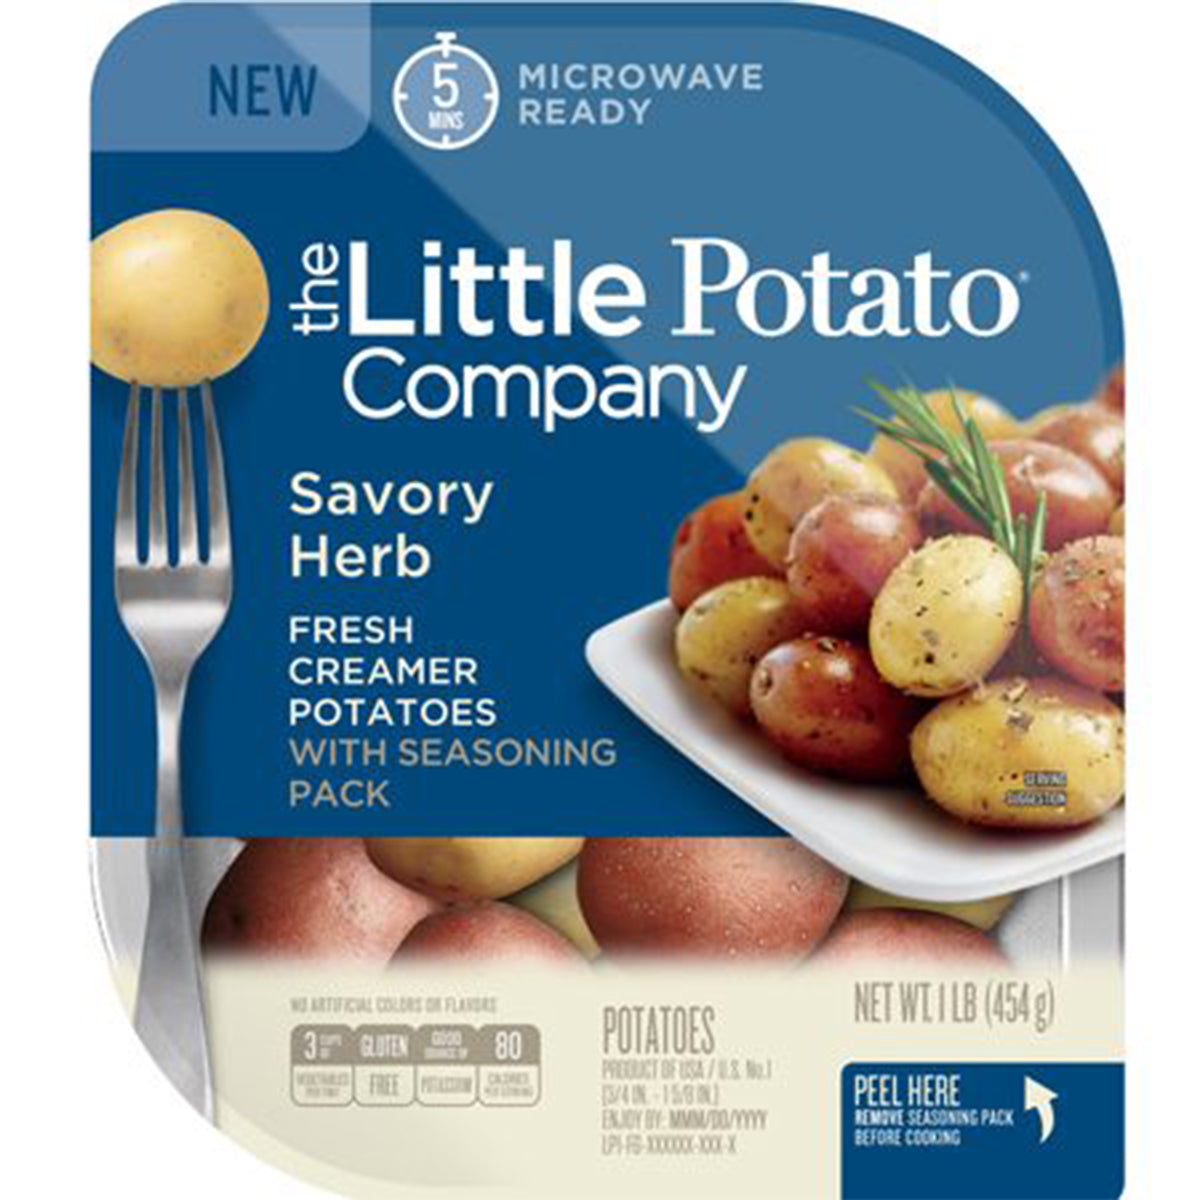 Little Potato Company Savory Herb Potatoes - 1 lb